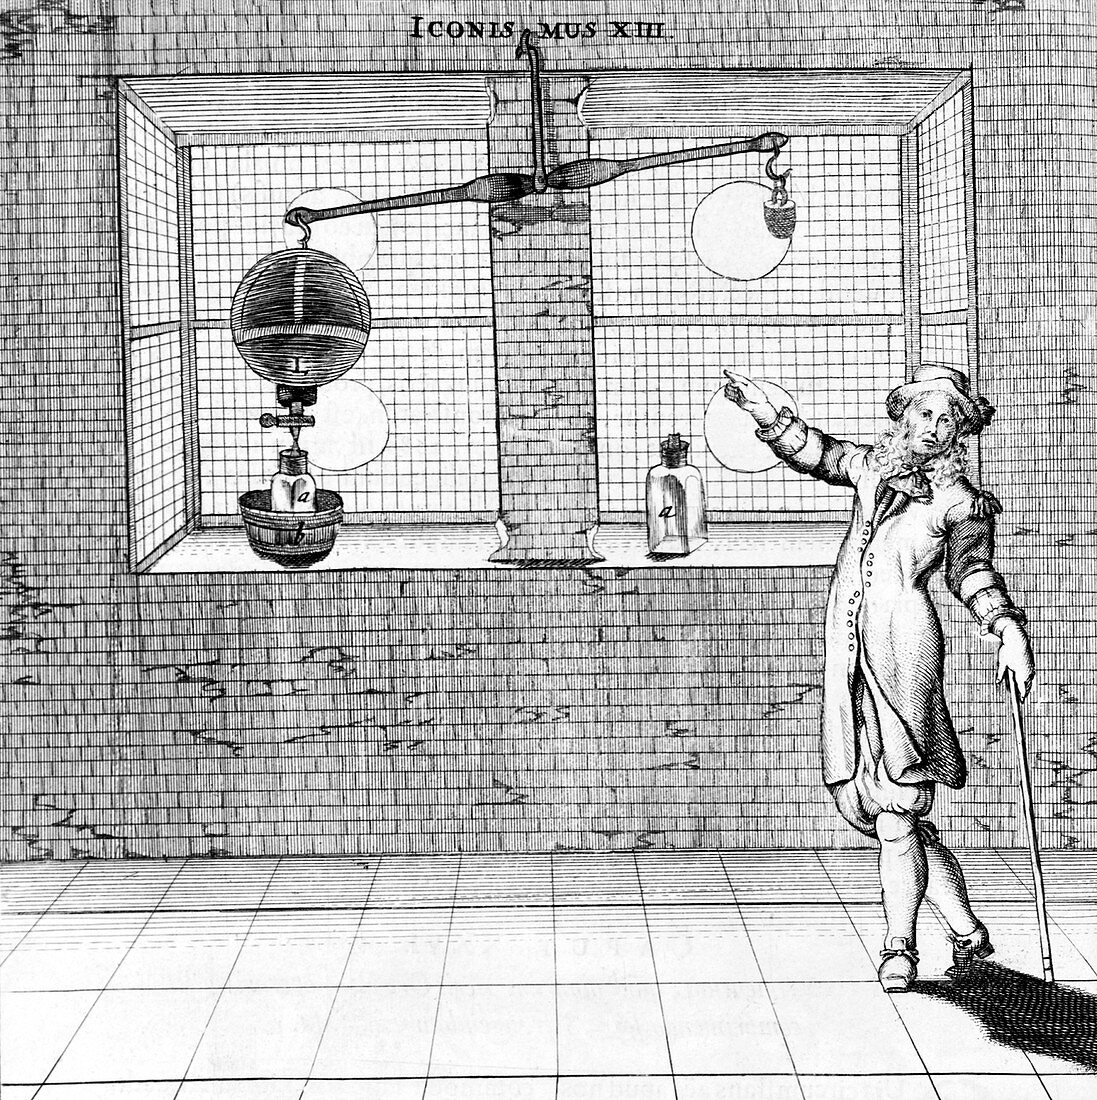 17th Century science demonstration